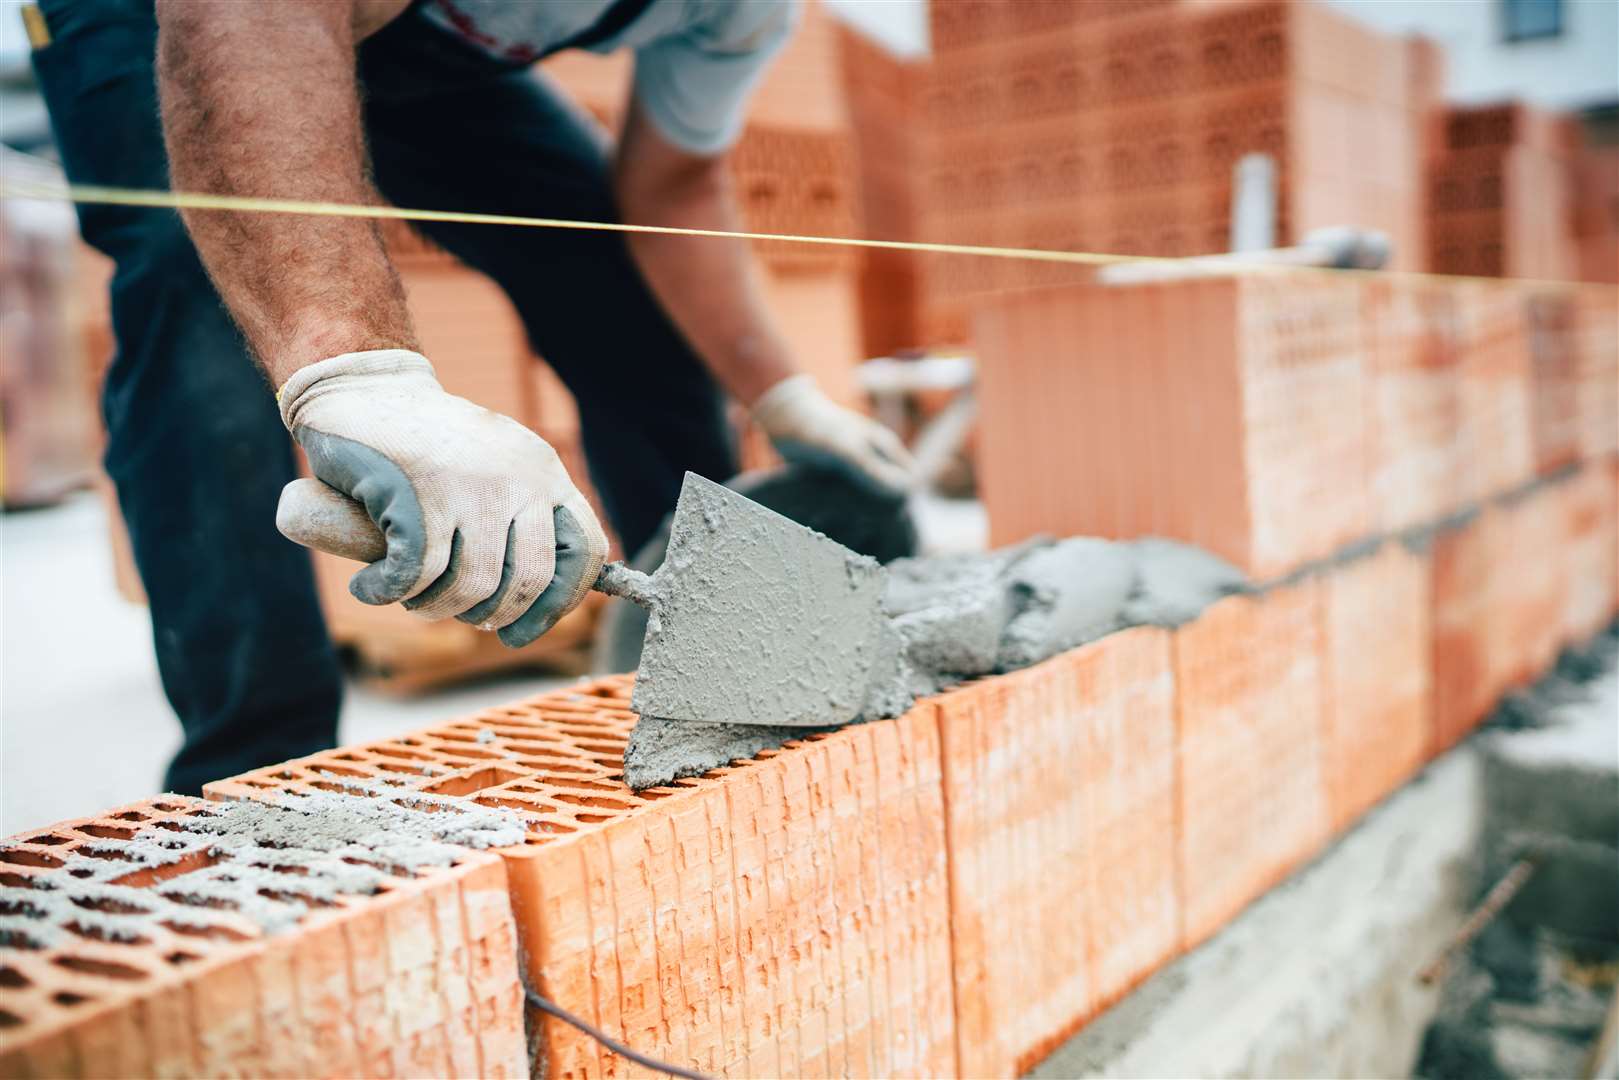 Bricks and mortar will help ease housing crisis, according to Edward Mountain.